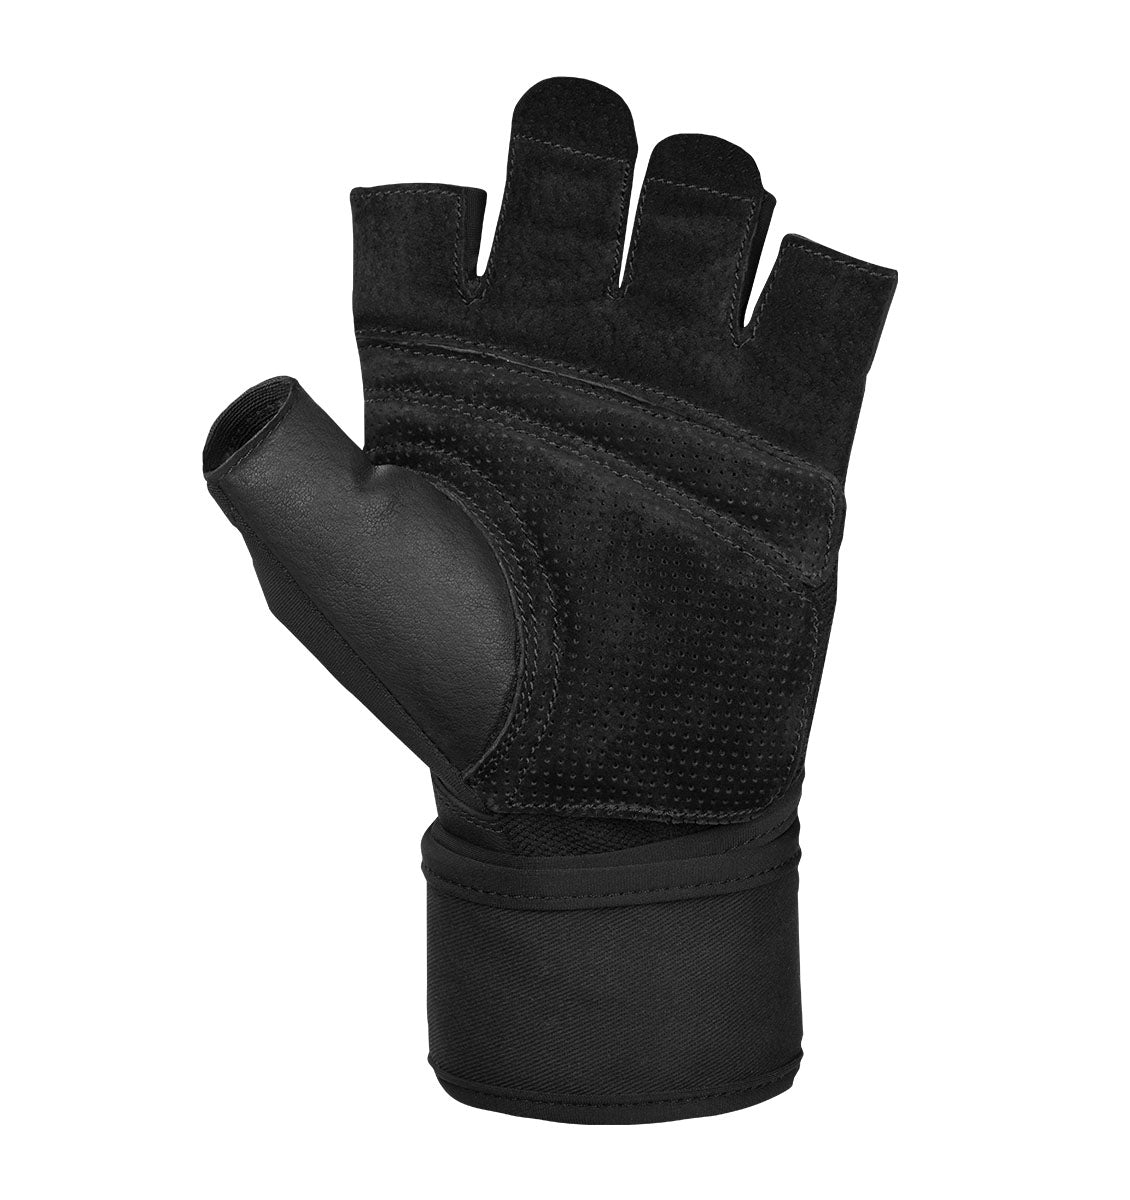 Harbinger Pro Wristwrap Gloves 2.0 - Unisex - Black - 3